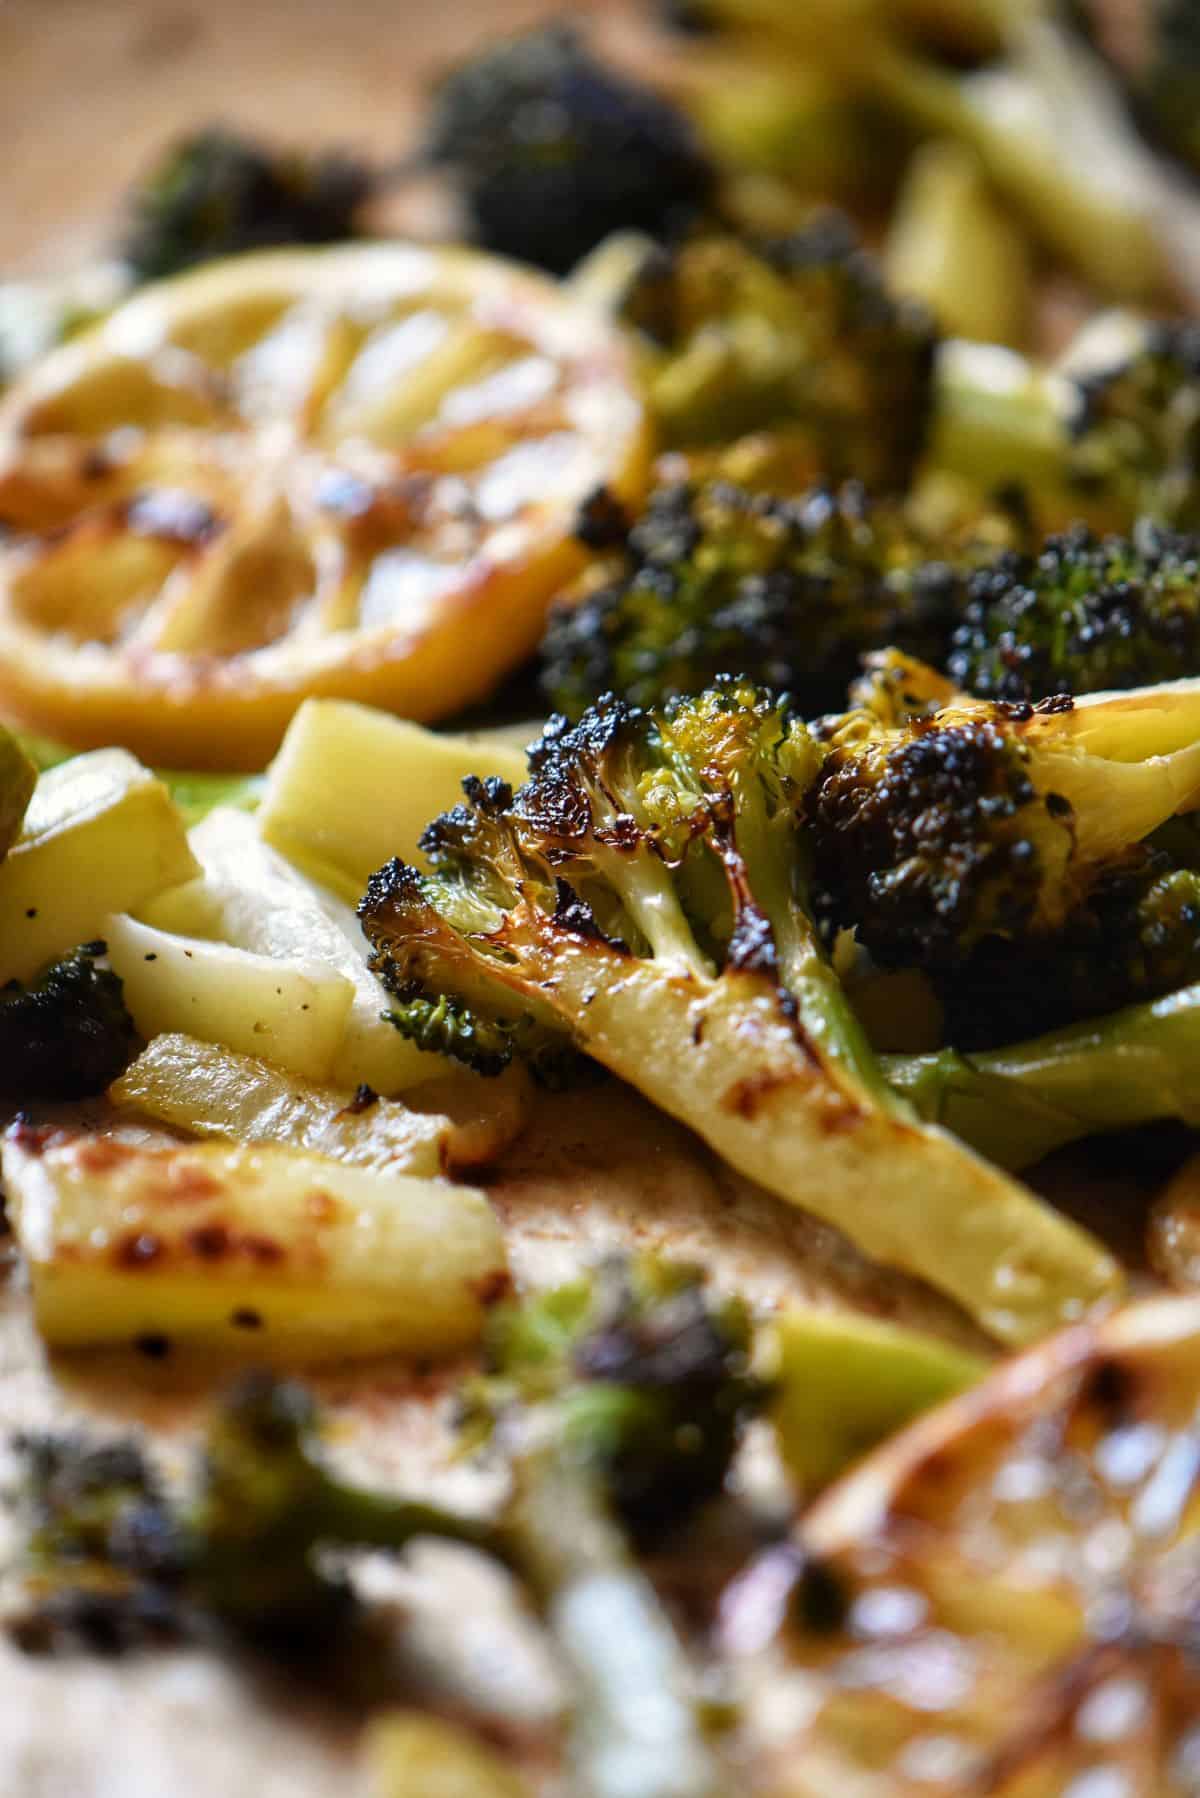 Oven roasted broccoli with lemon.